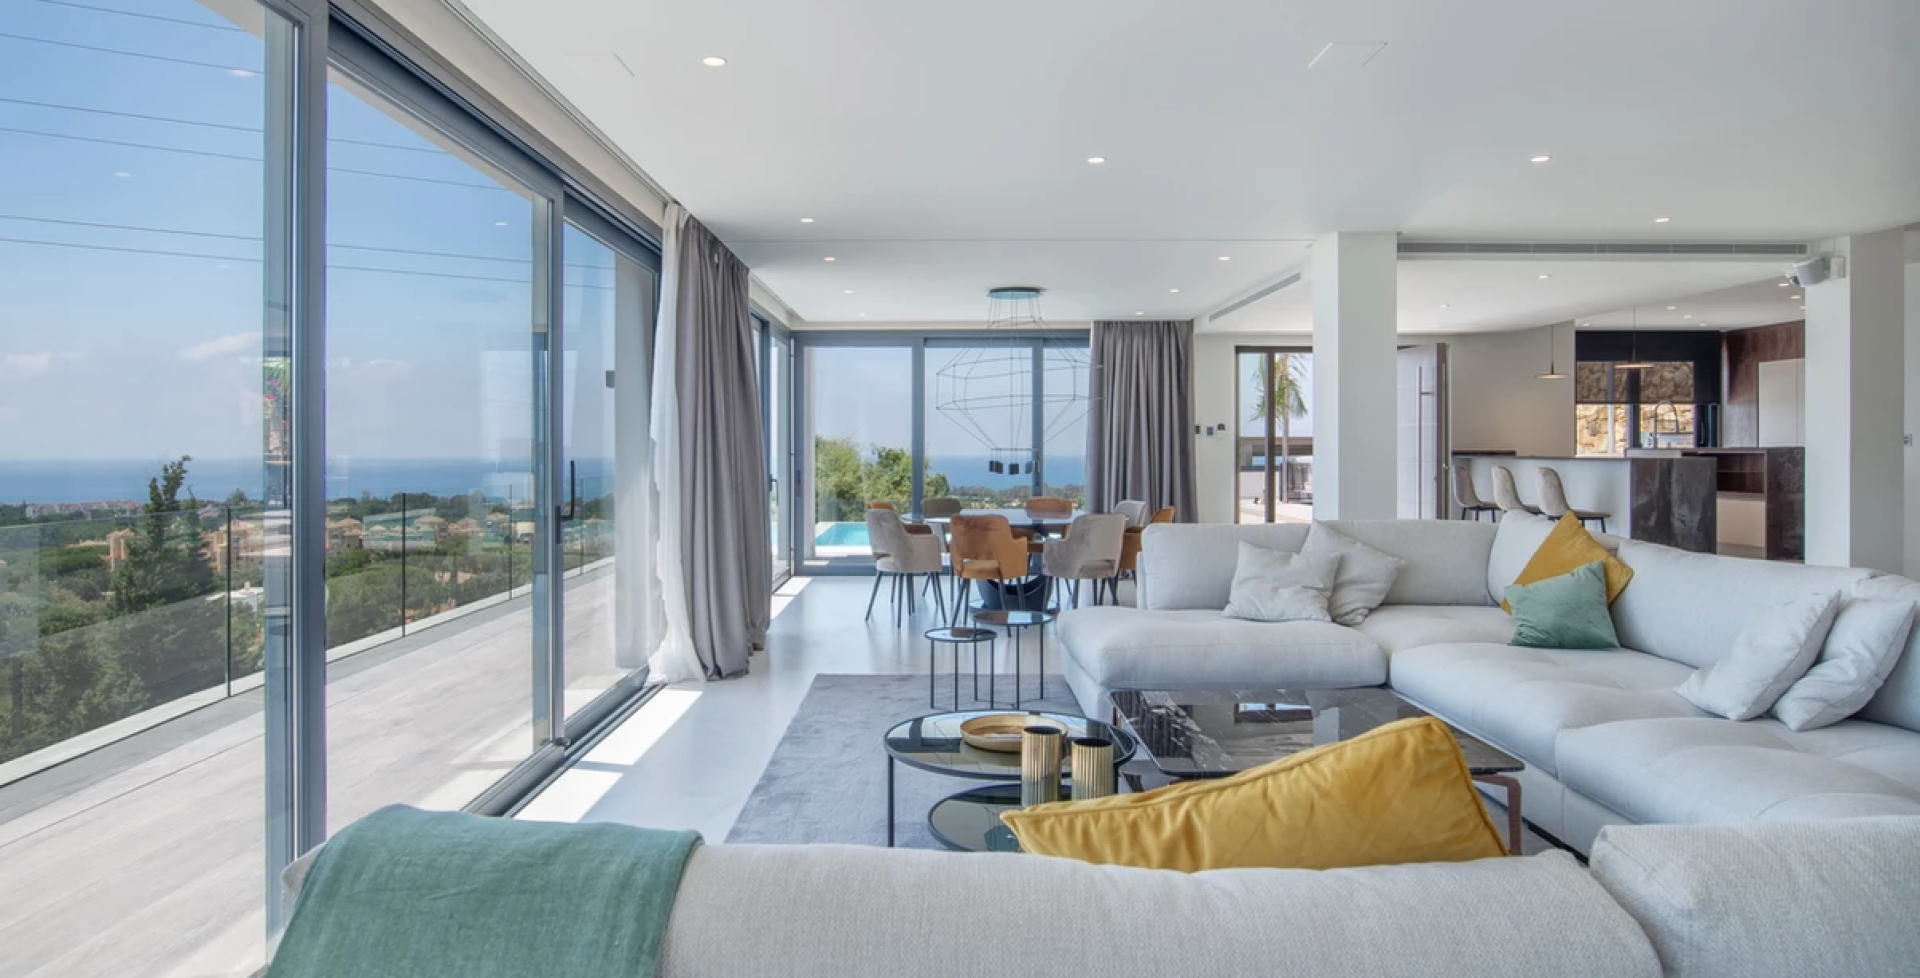 VILLA SUN 7 bedrooms Marbella holiday rental lounge with sea views